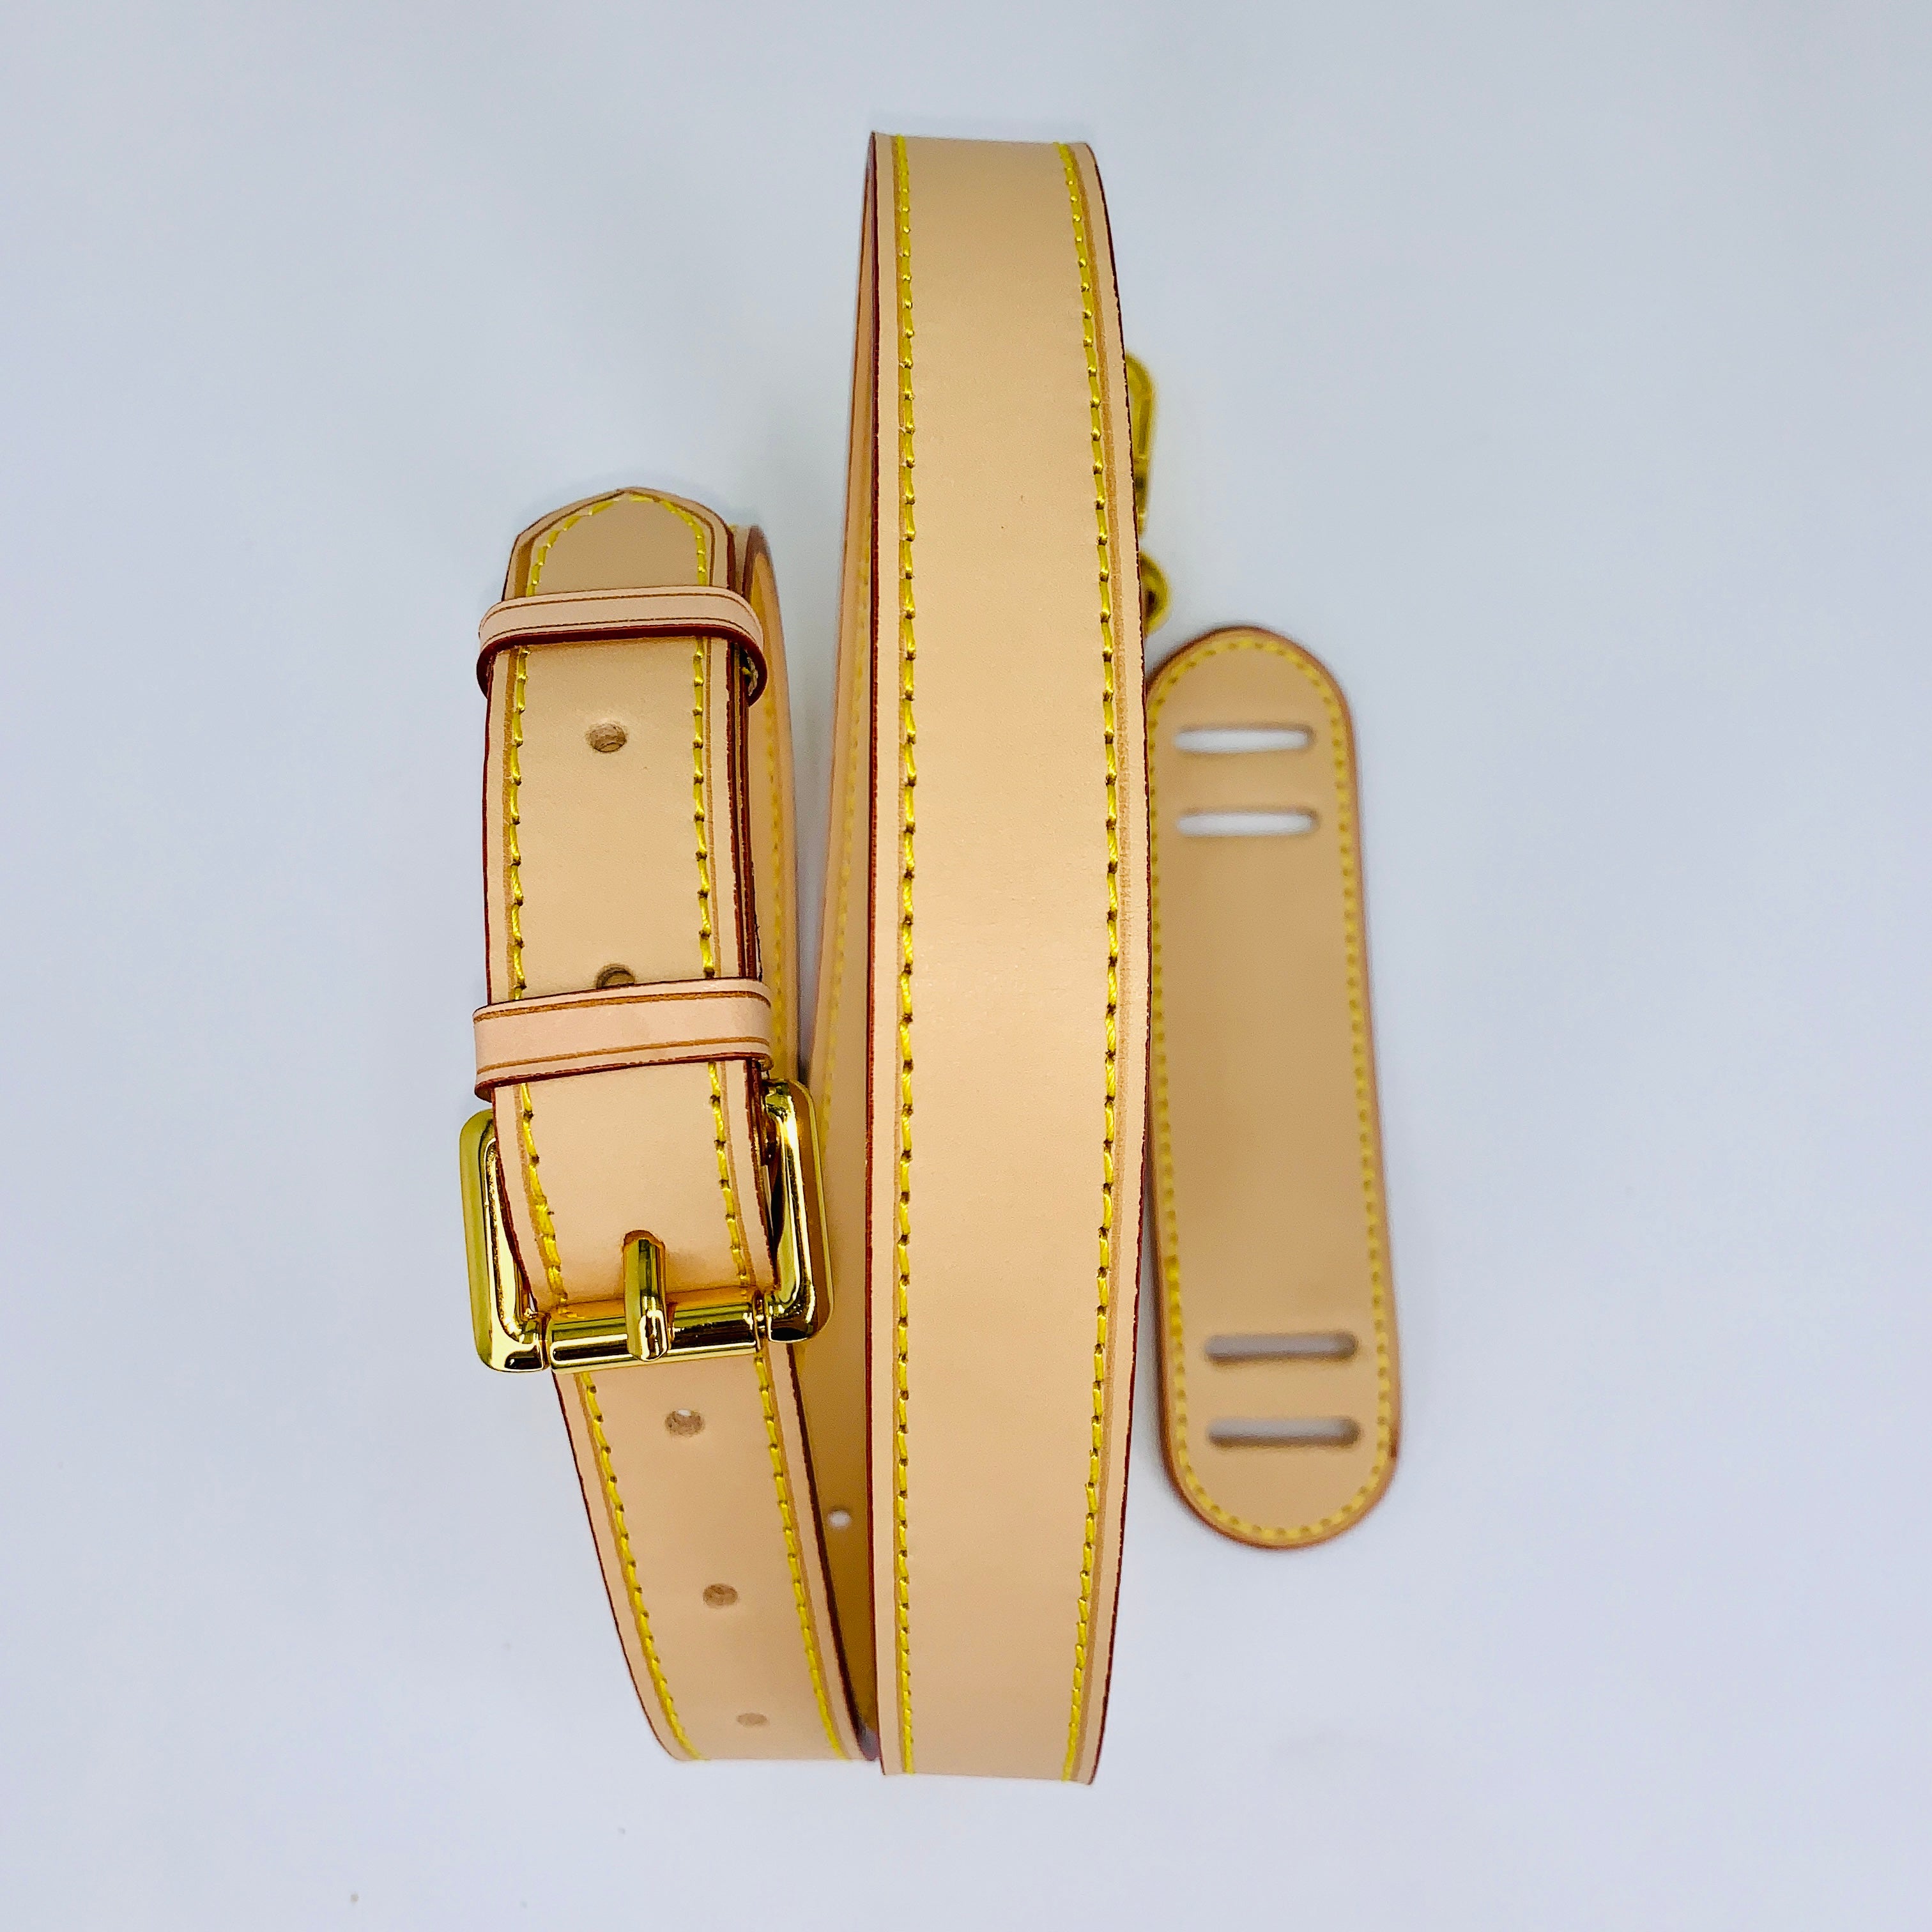 New Louis Vuitton Speedy Bandoulière 20 bag with a adjustable strap 